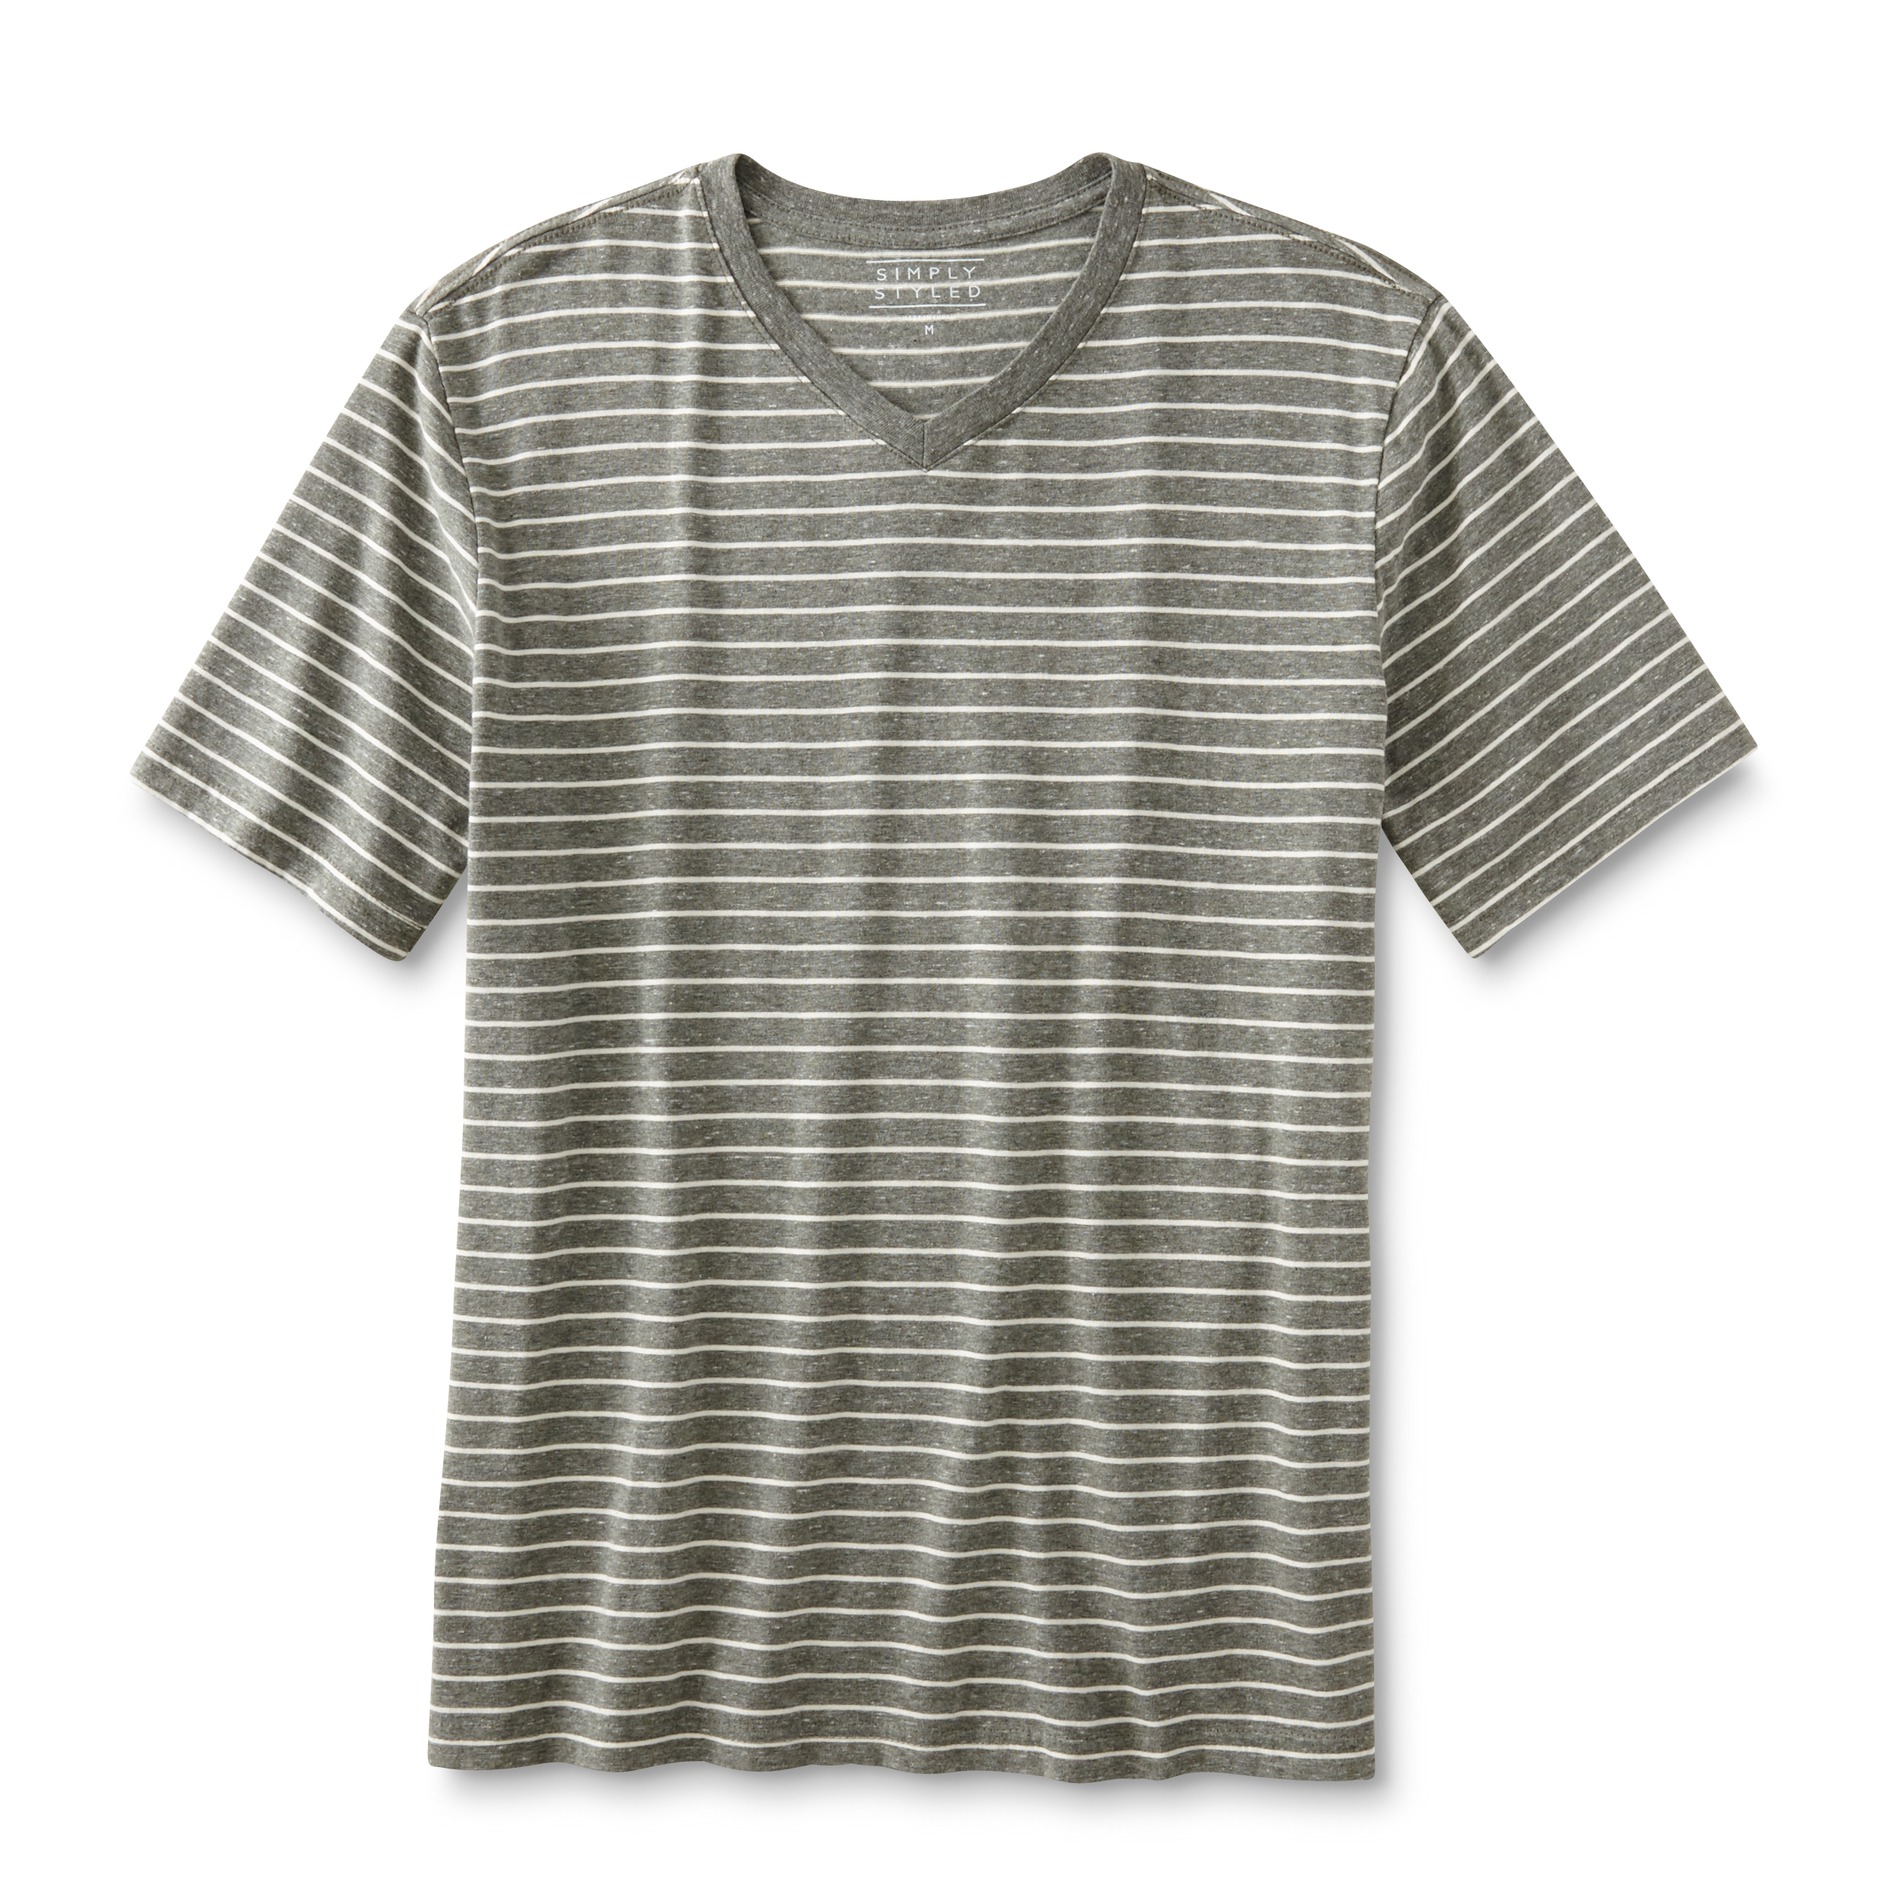 Simply Styled Men's V-Neck T-Shirt - Striped